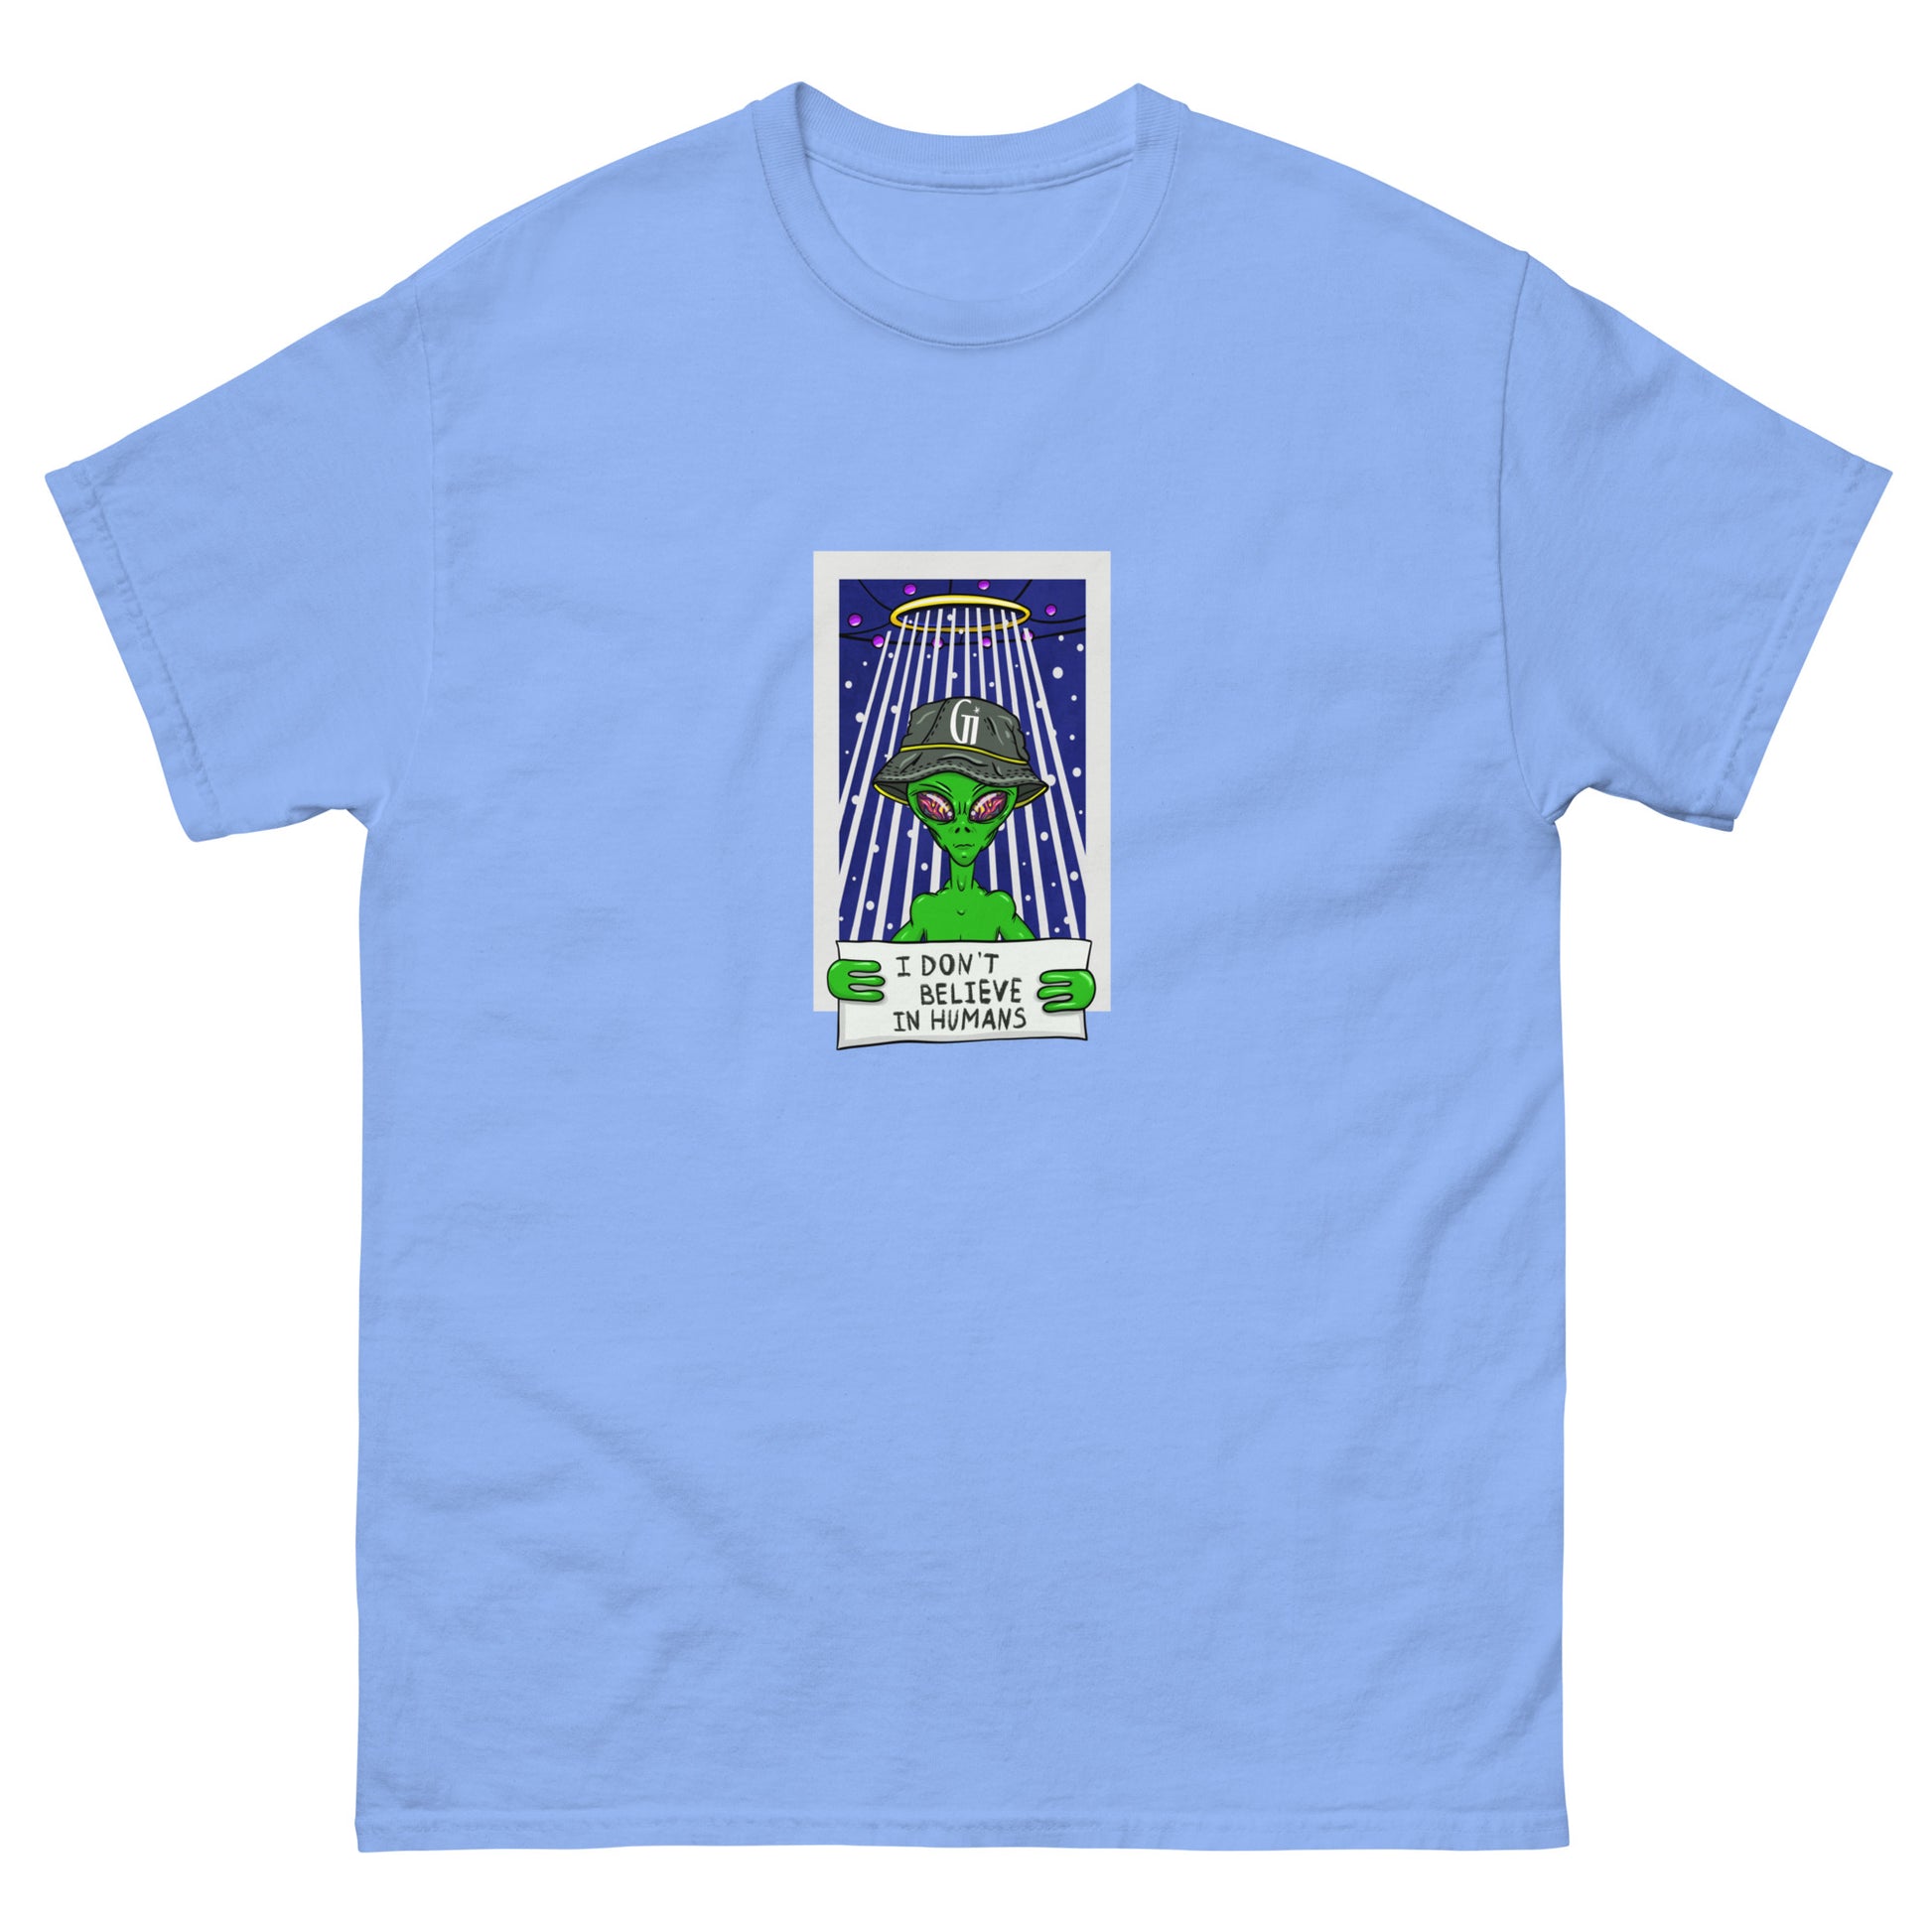 carolina blue color cotton t shirt with stylish alien